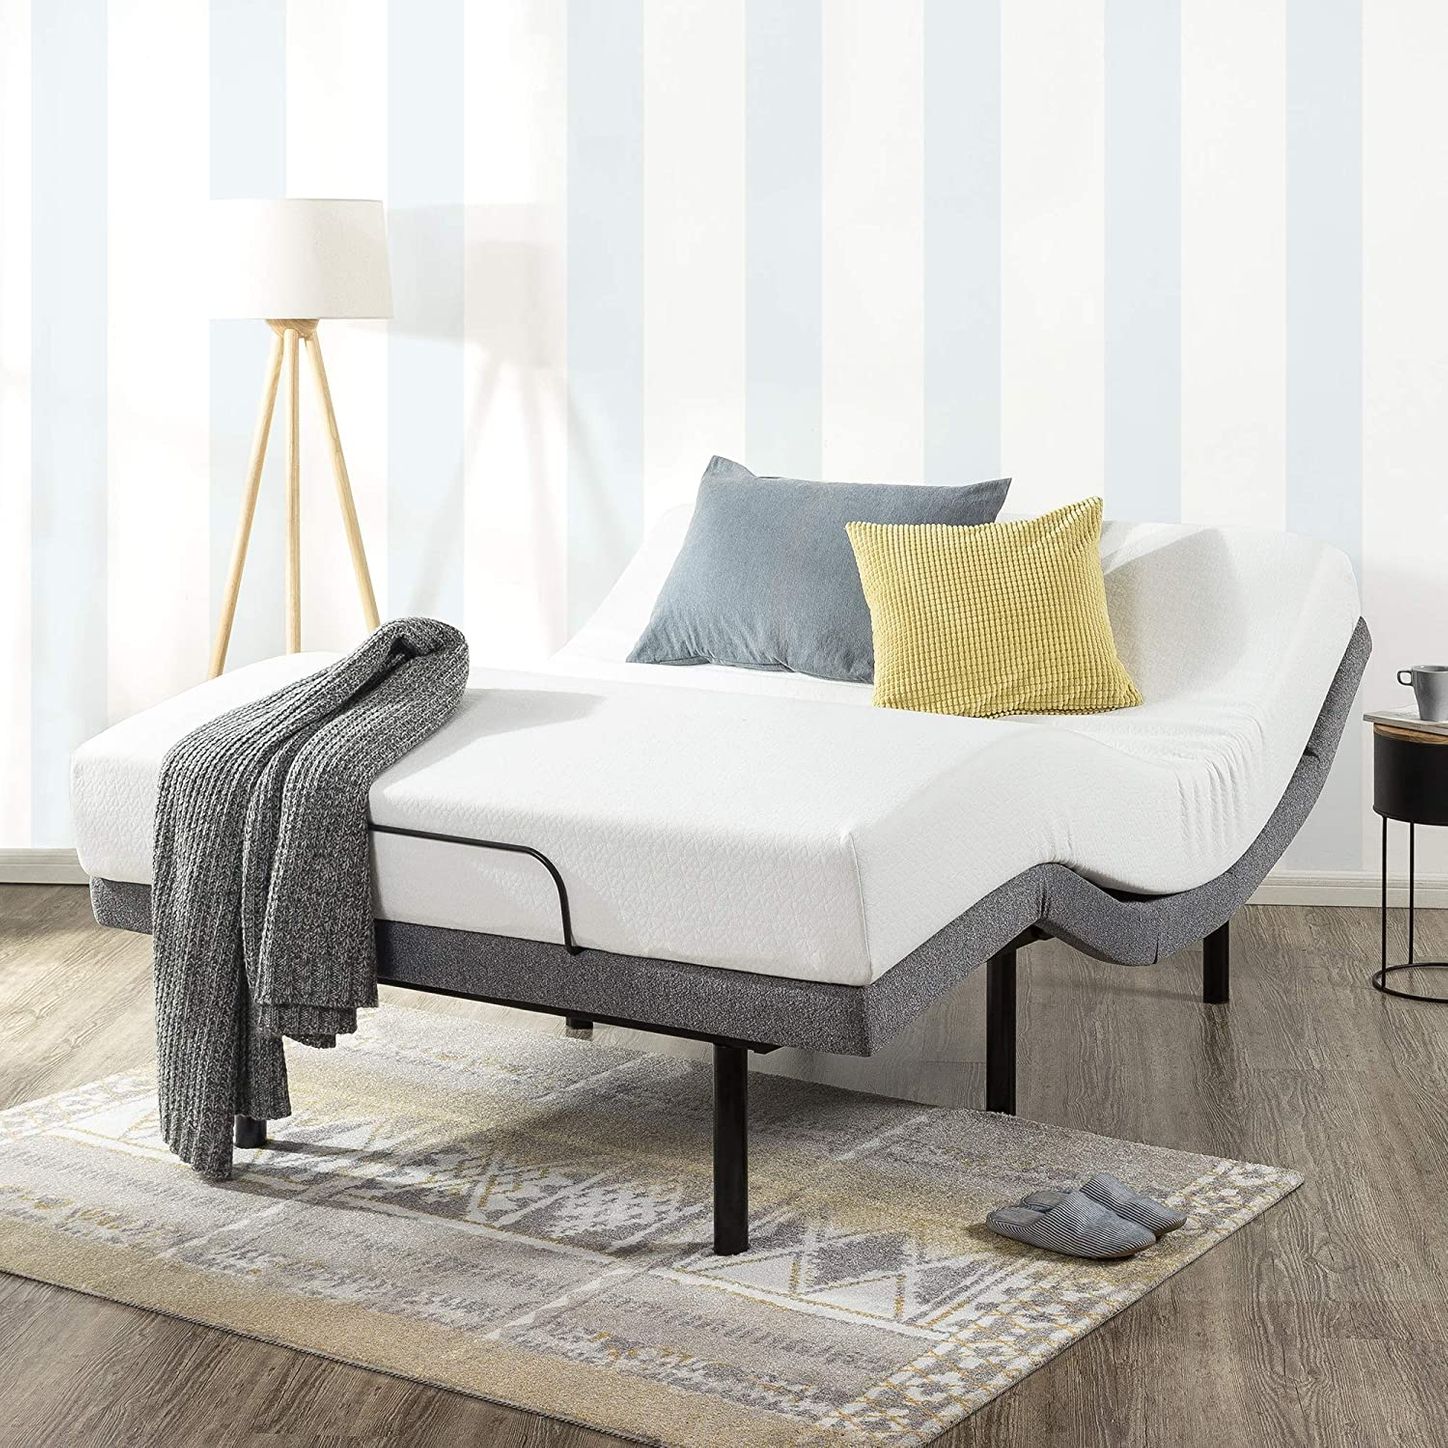 10 Best Adjustable Bed Bases 2022 The, Best Adjustable Bed Frame For Heavy Person